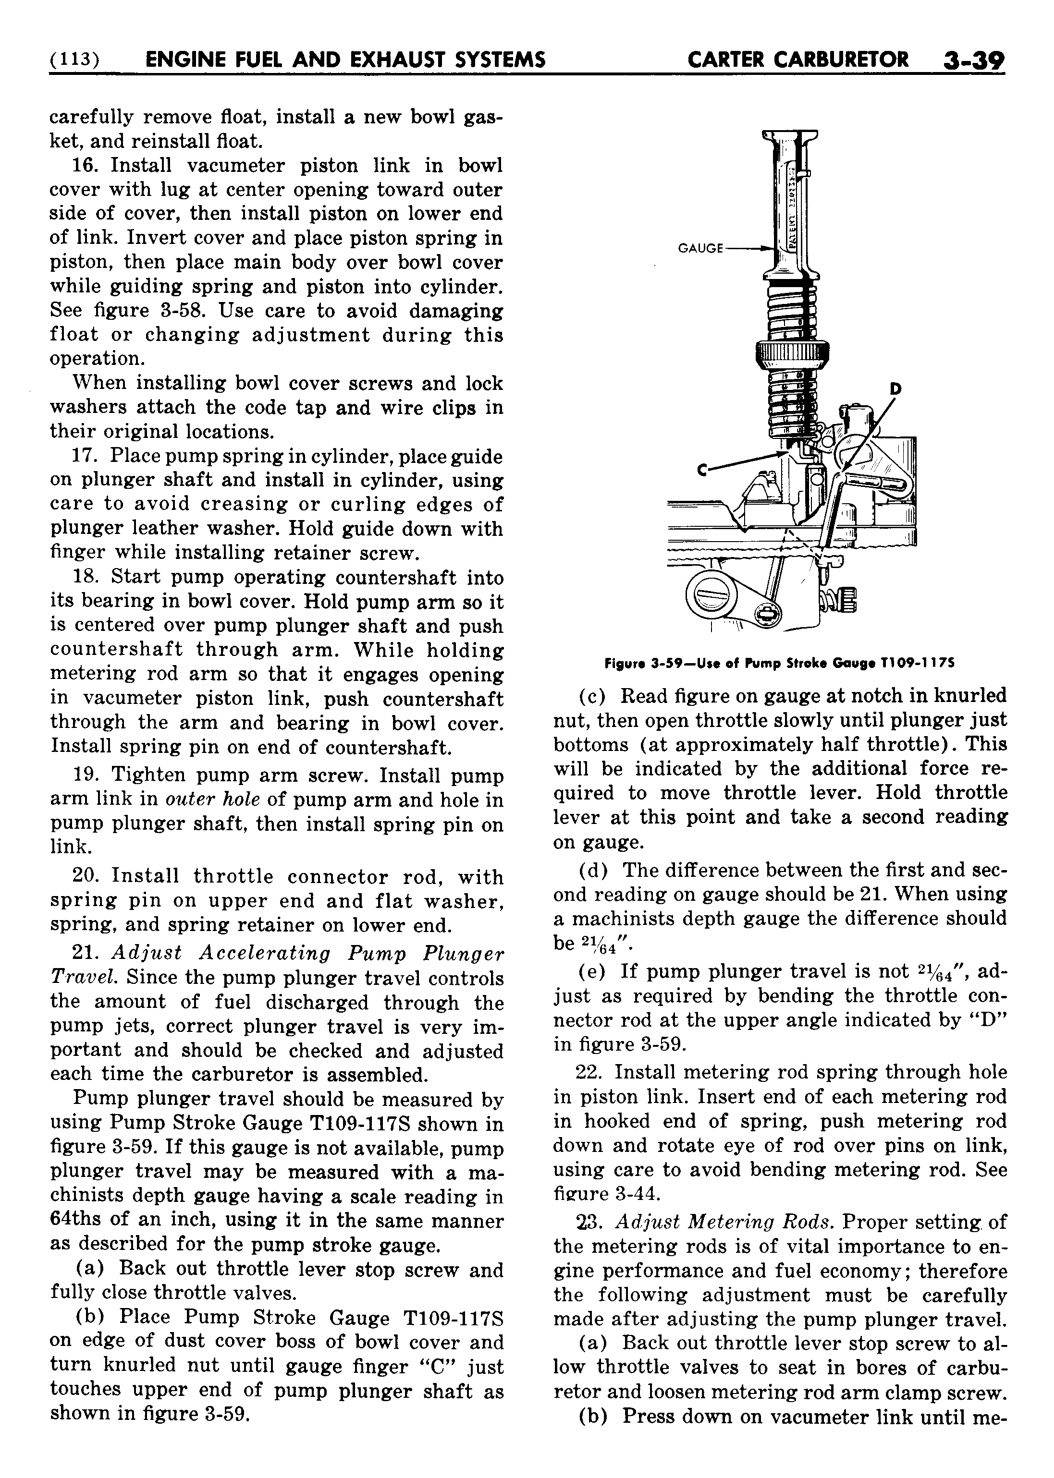 n_04 1948 Buick Shop Manual - Engine Fuel & Exhaust-039-039.jpg